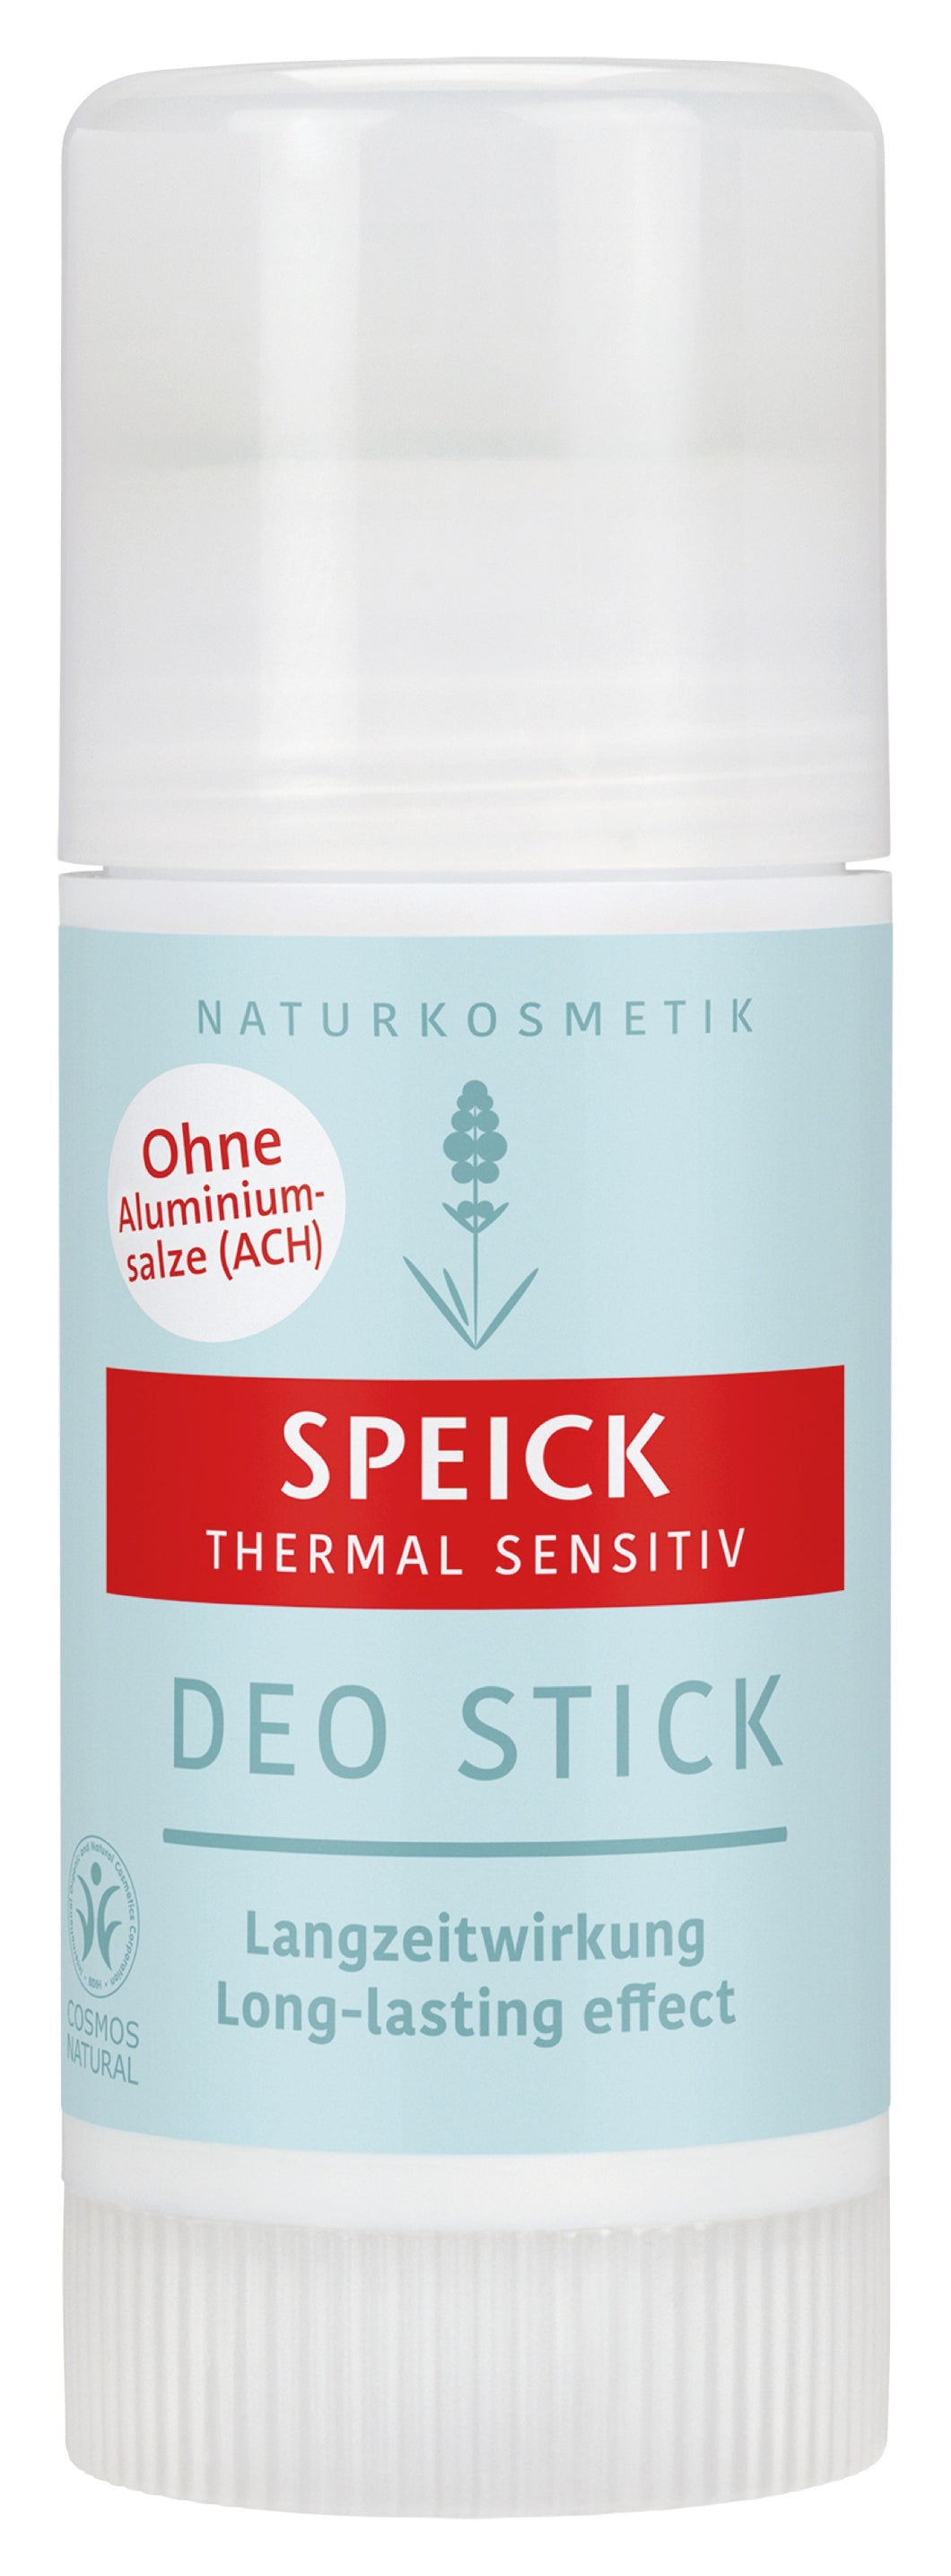 Speick Thermal Sensitiv Deo Stick